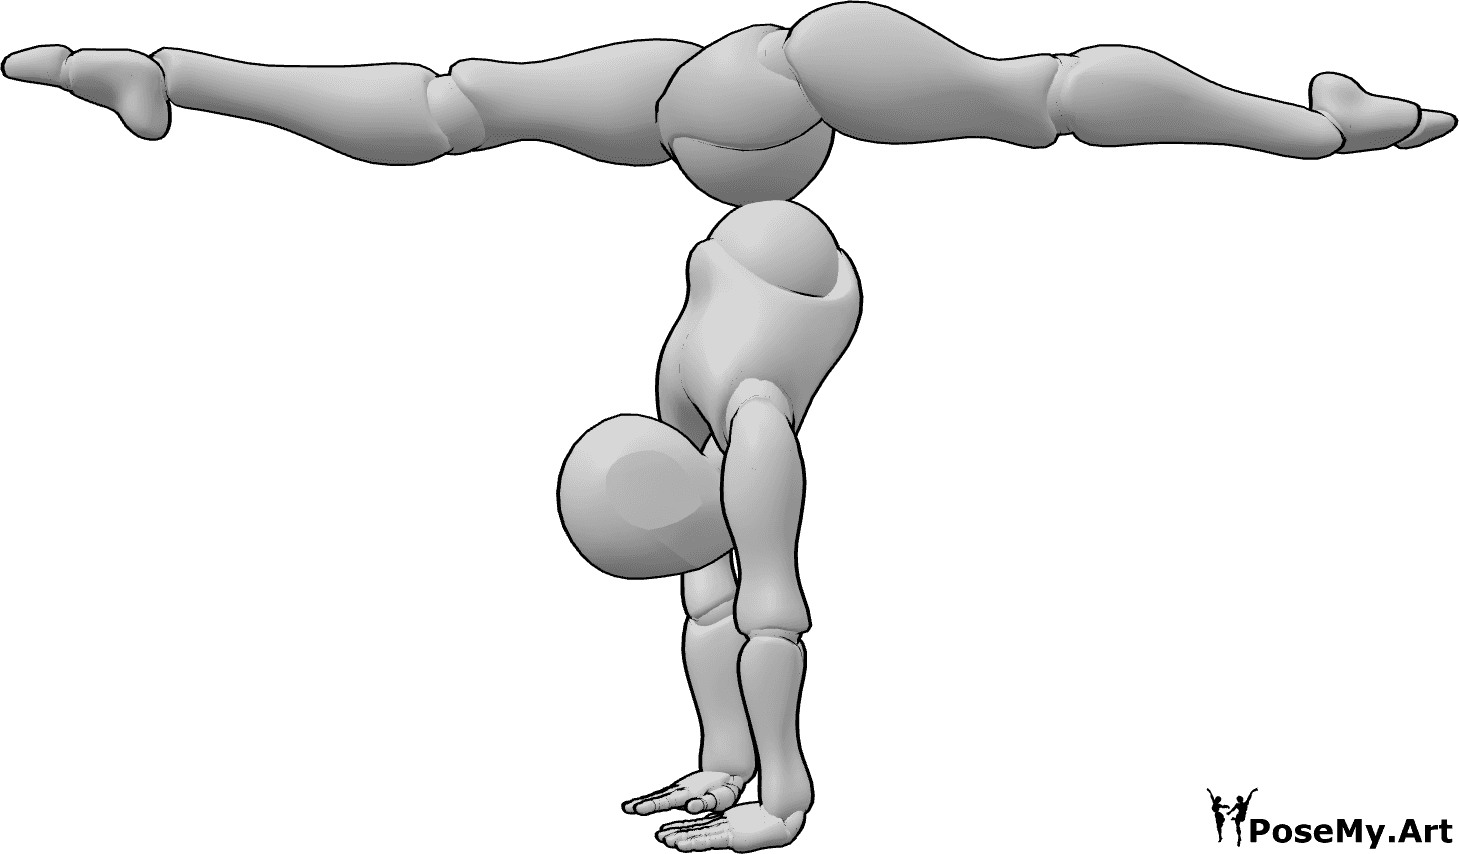 Pose Reference - Handstanding front split pose - Female is handstanding and doing a front split in the air